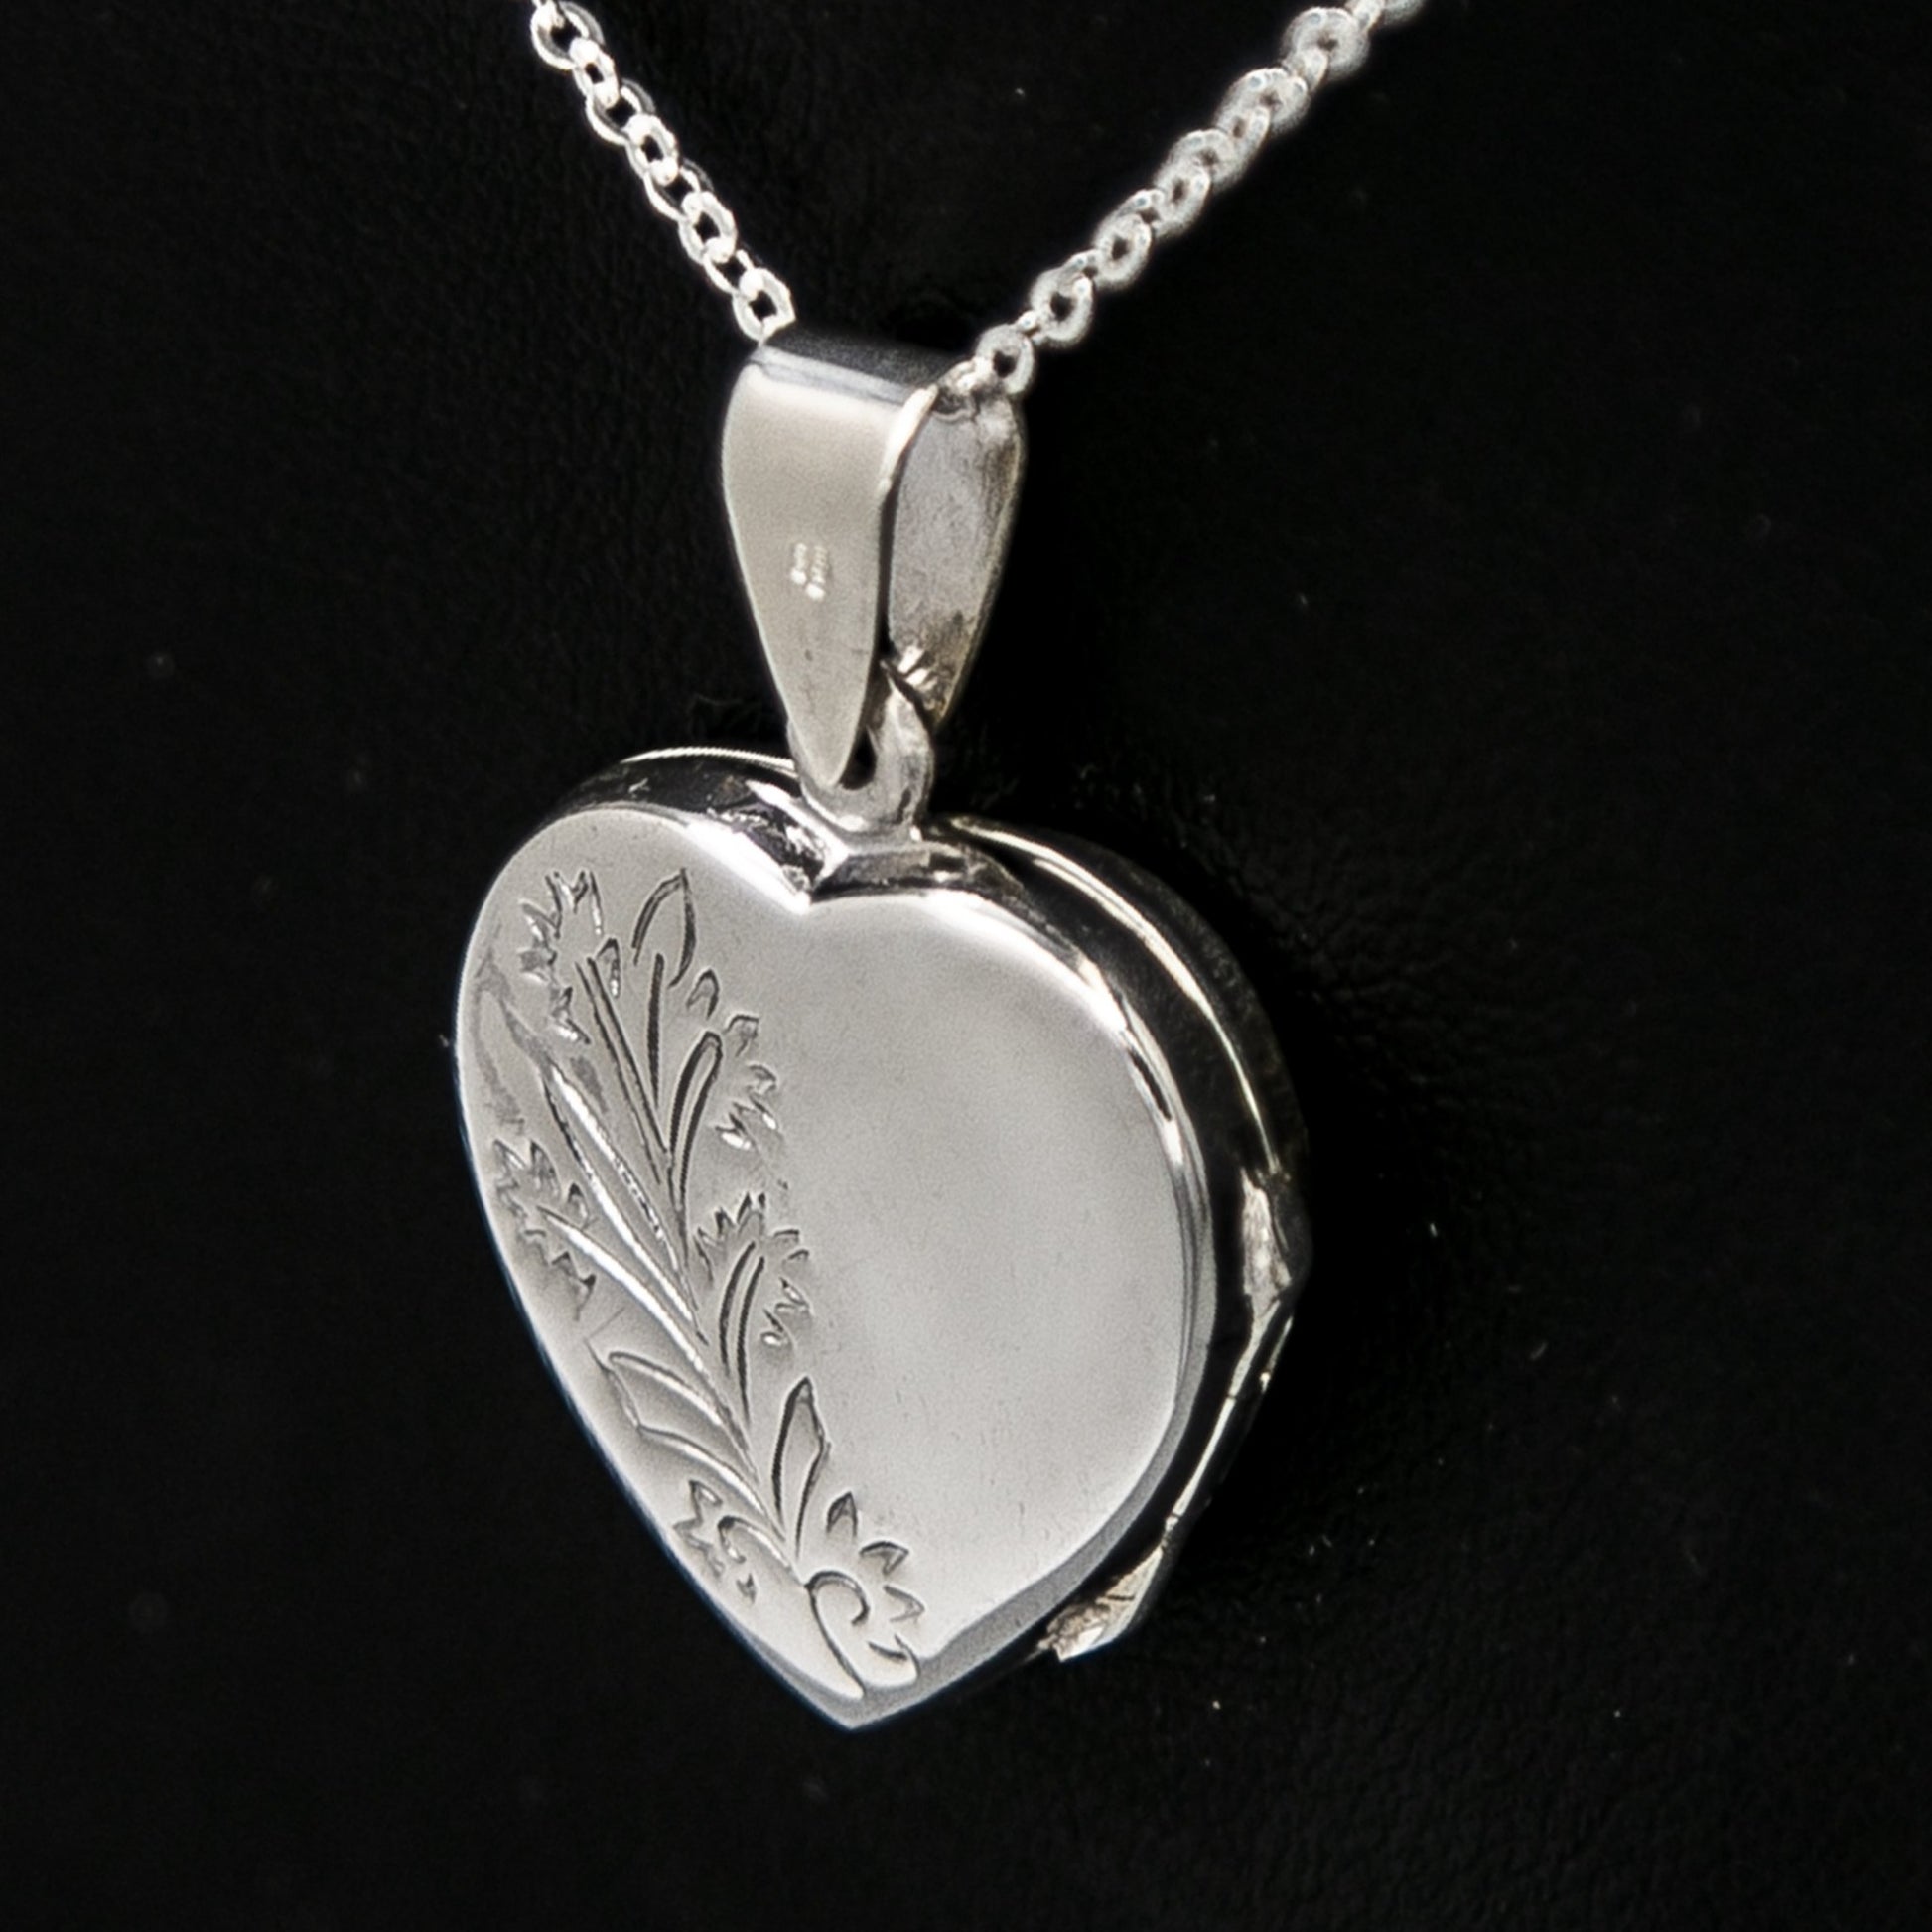 Silver heart-shaped photo locket pendantwith embellishment on Italian silver chain